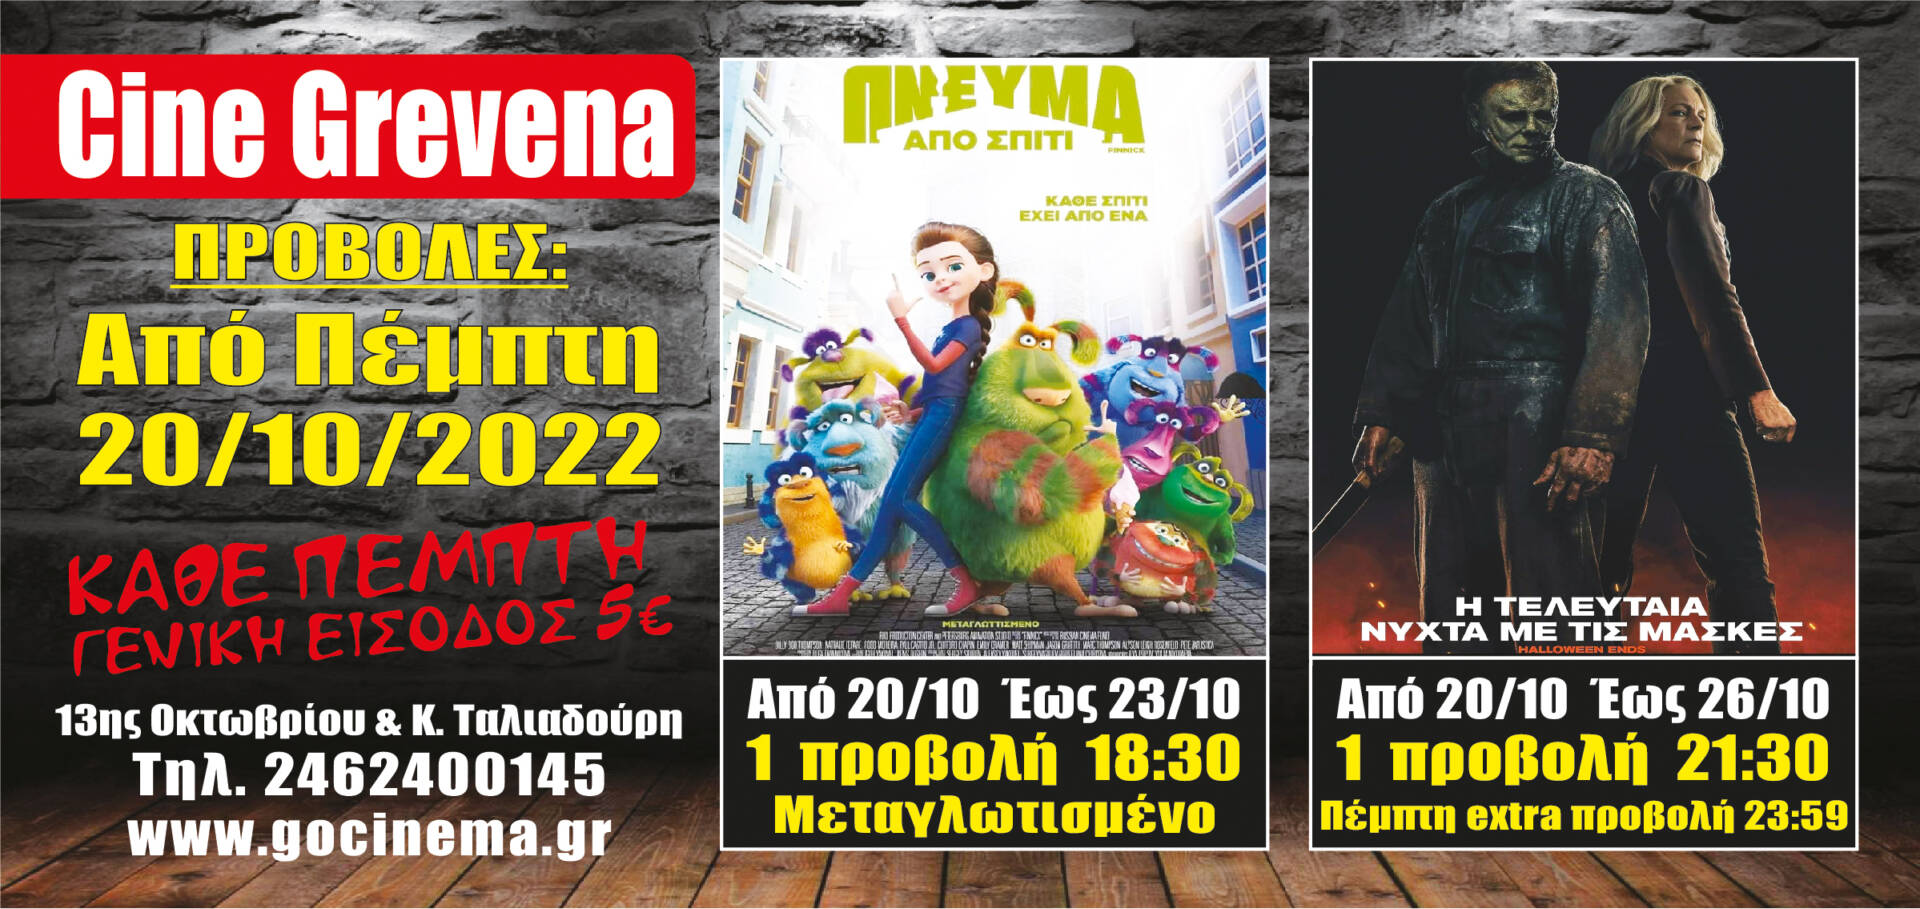 Cine Grevena Κινηματογράφος: Oι προβολές των ταινιών από την Πέμπτη 20 Οκτωβρίου έως την Τετάρτη 26 Οκτωβρίου 2022